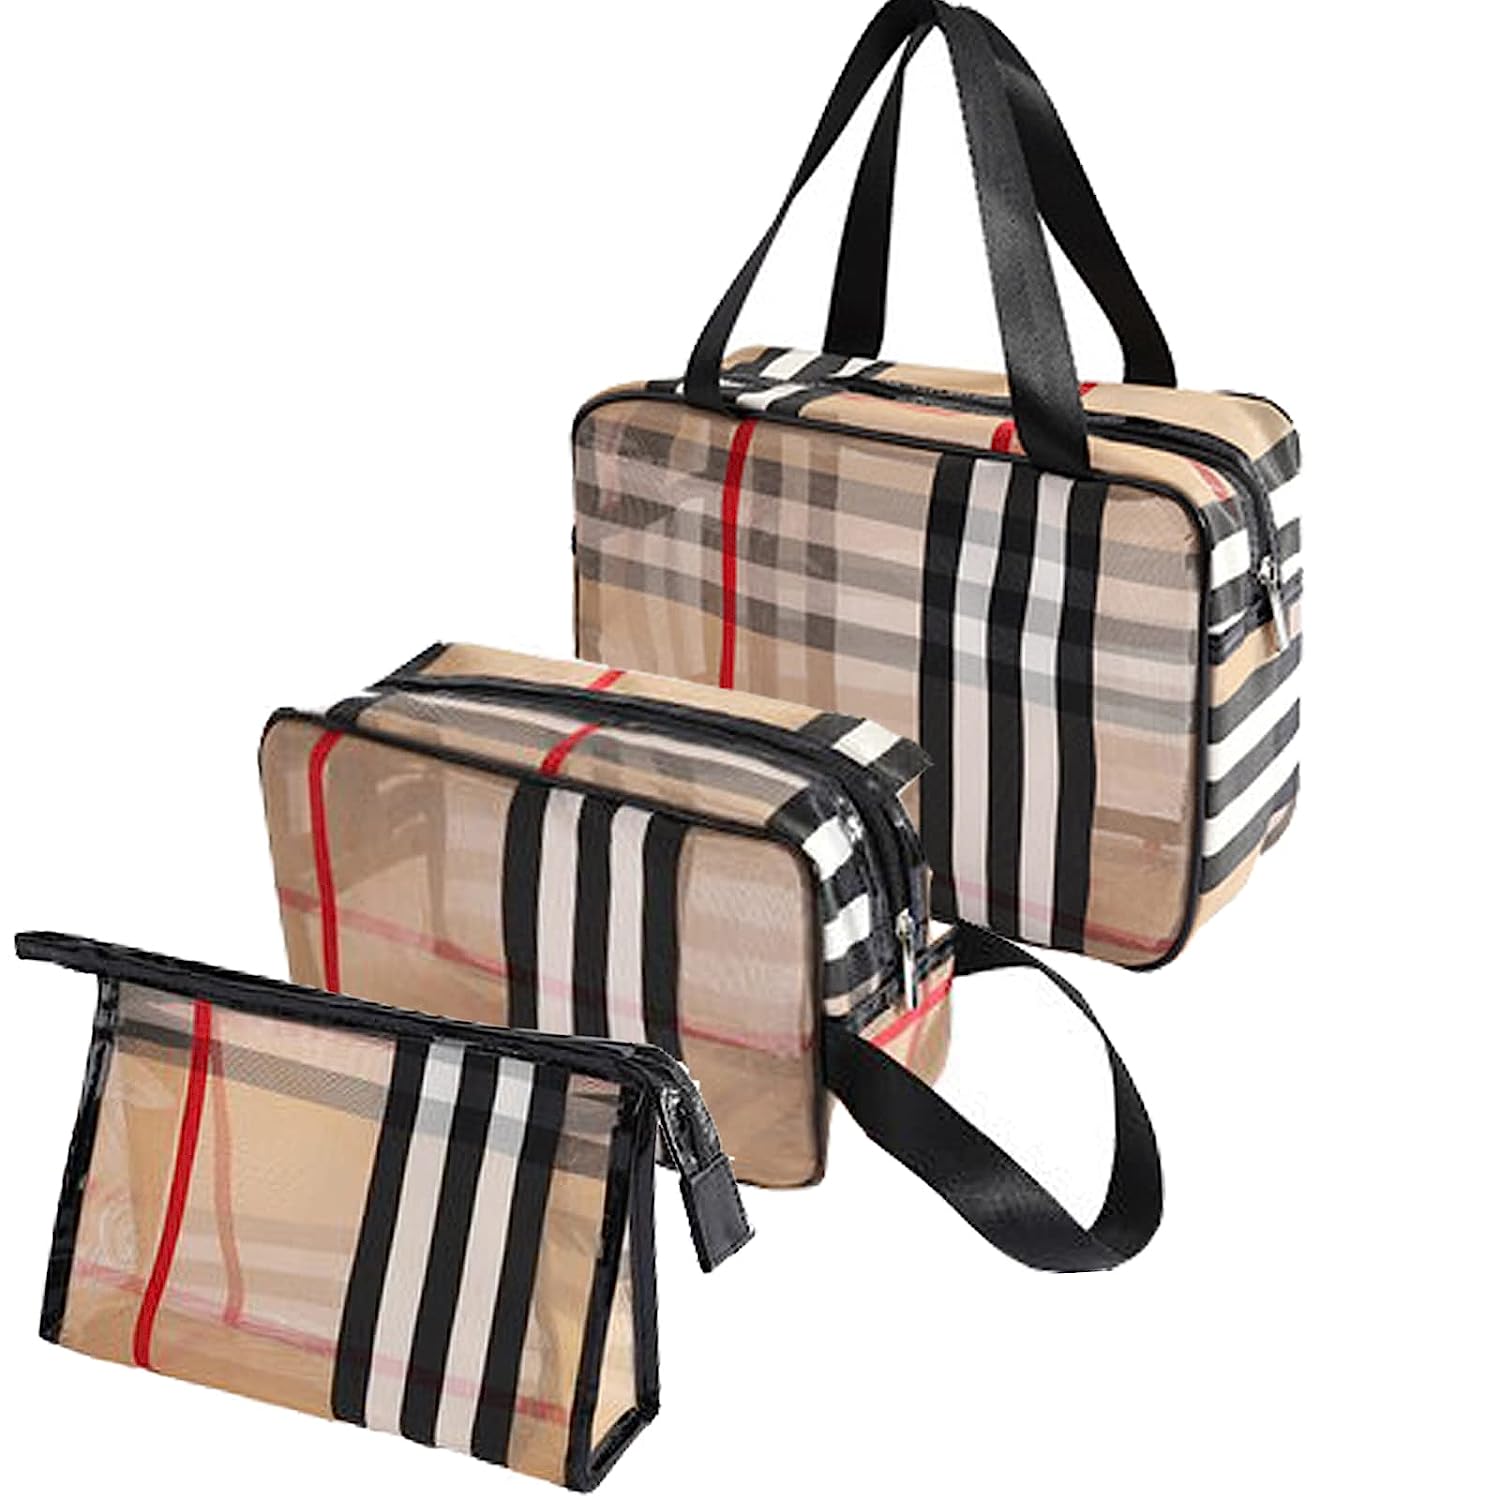  CELEDAS Cosmetic bag - check pattern cosmetic bag